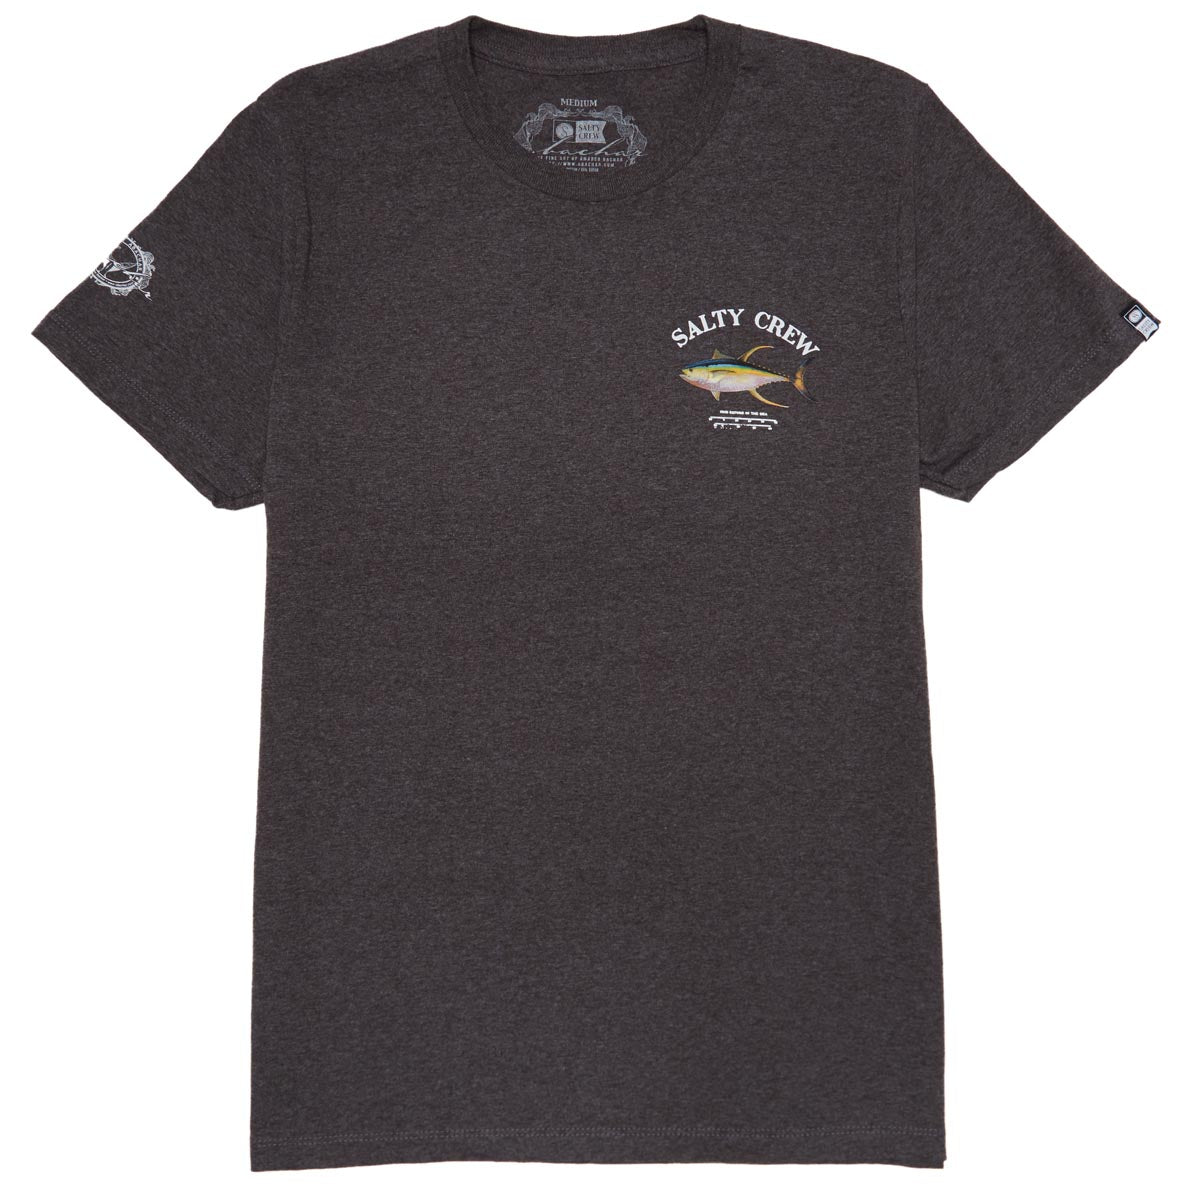 Salty Crew Ahi Mount Classic T-Shirt - Charcoal Heather image 2